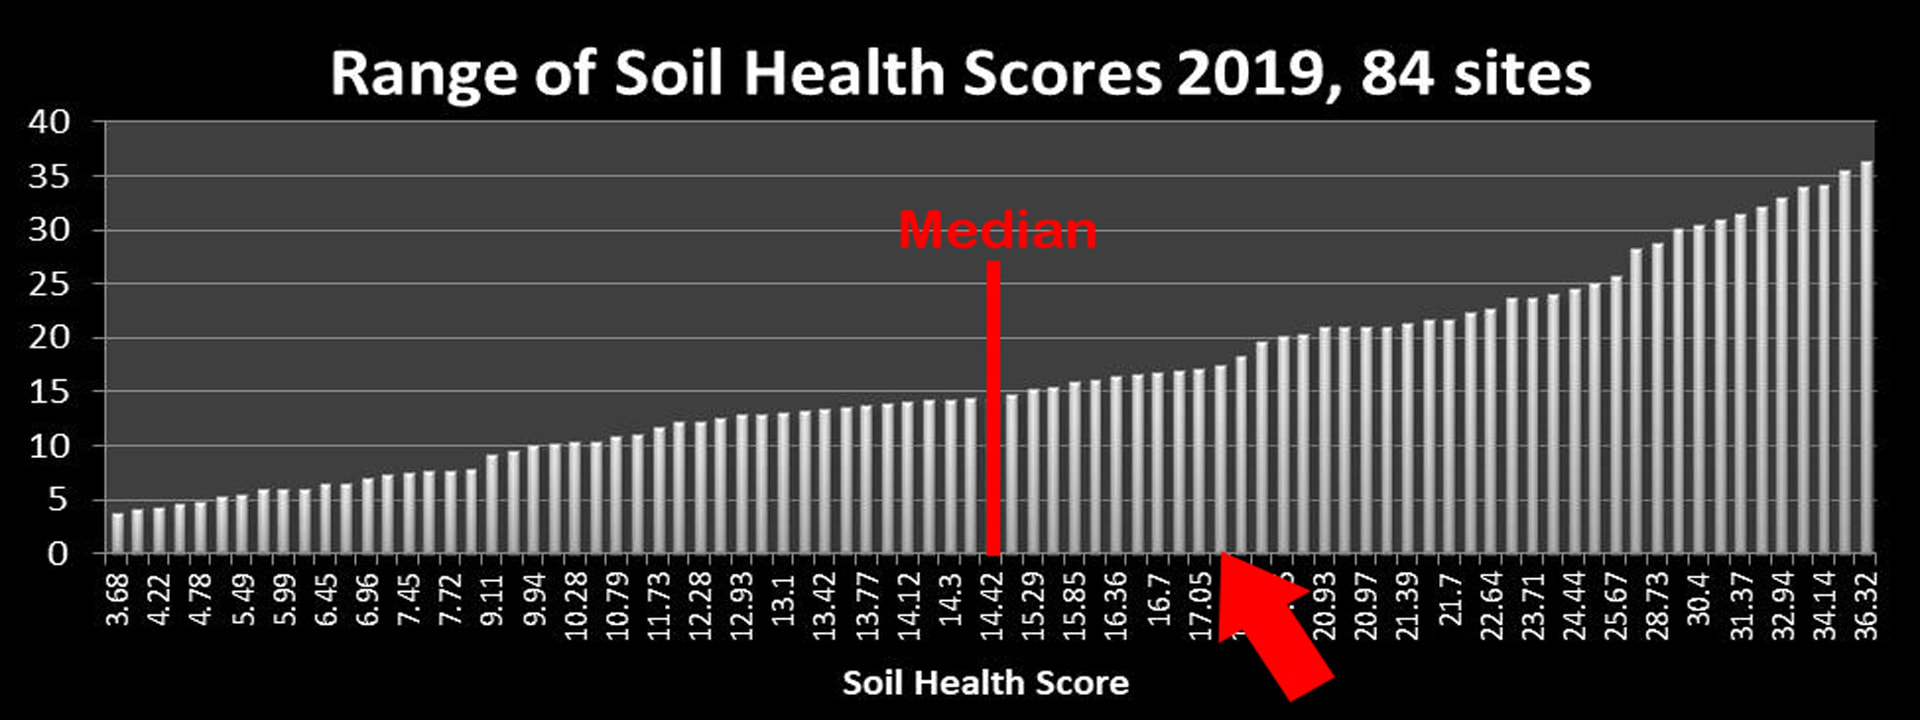 Soil Health varies on Colorado's Front Range